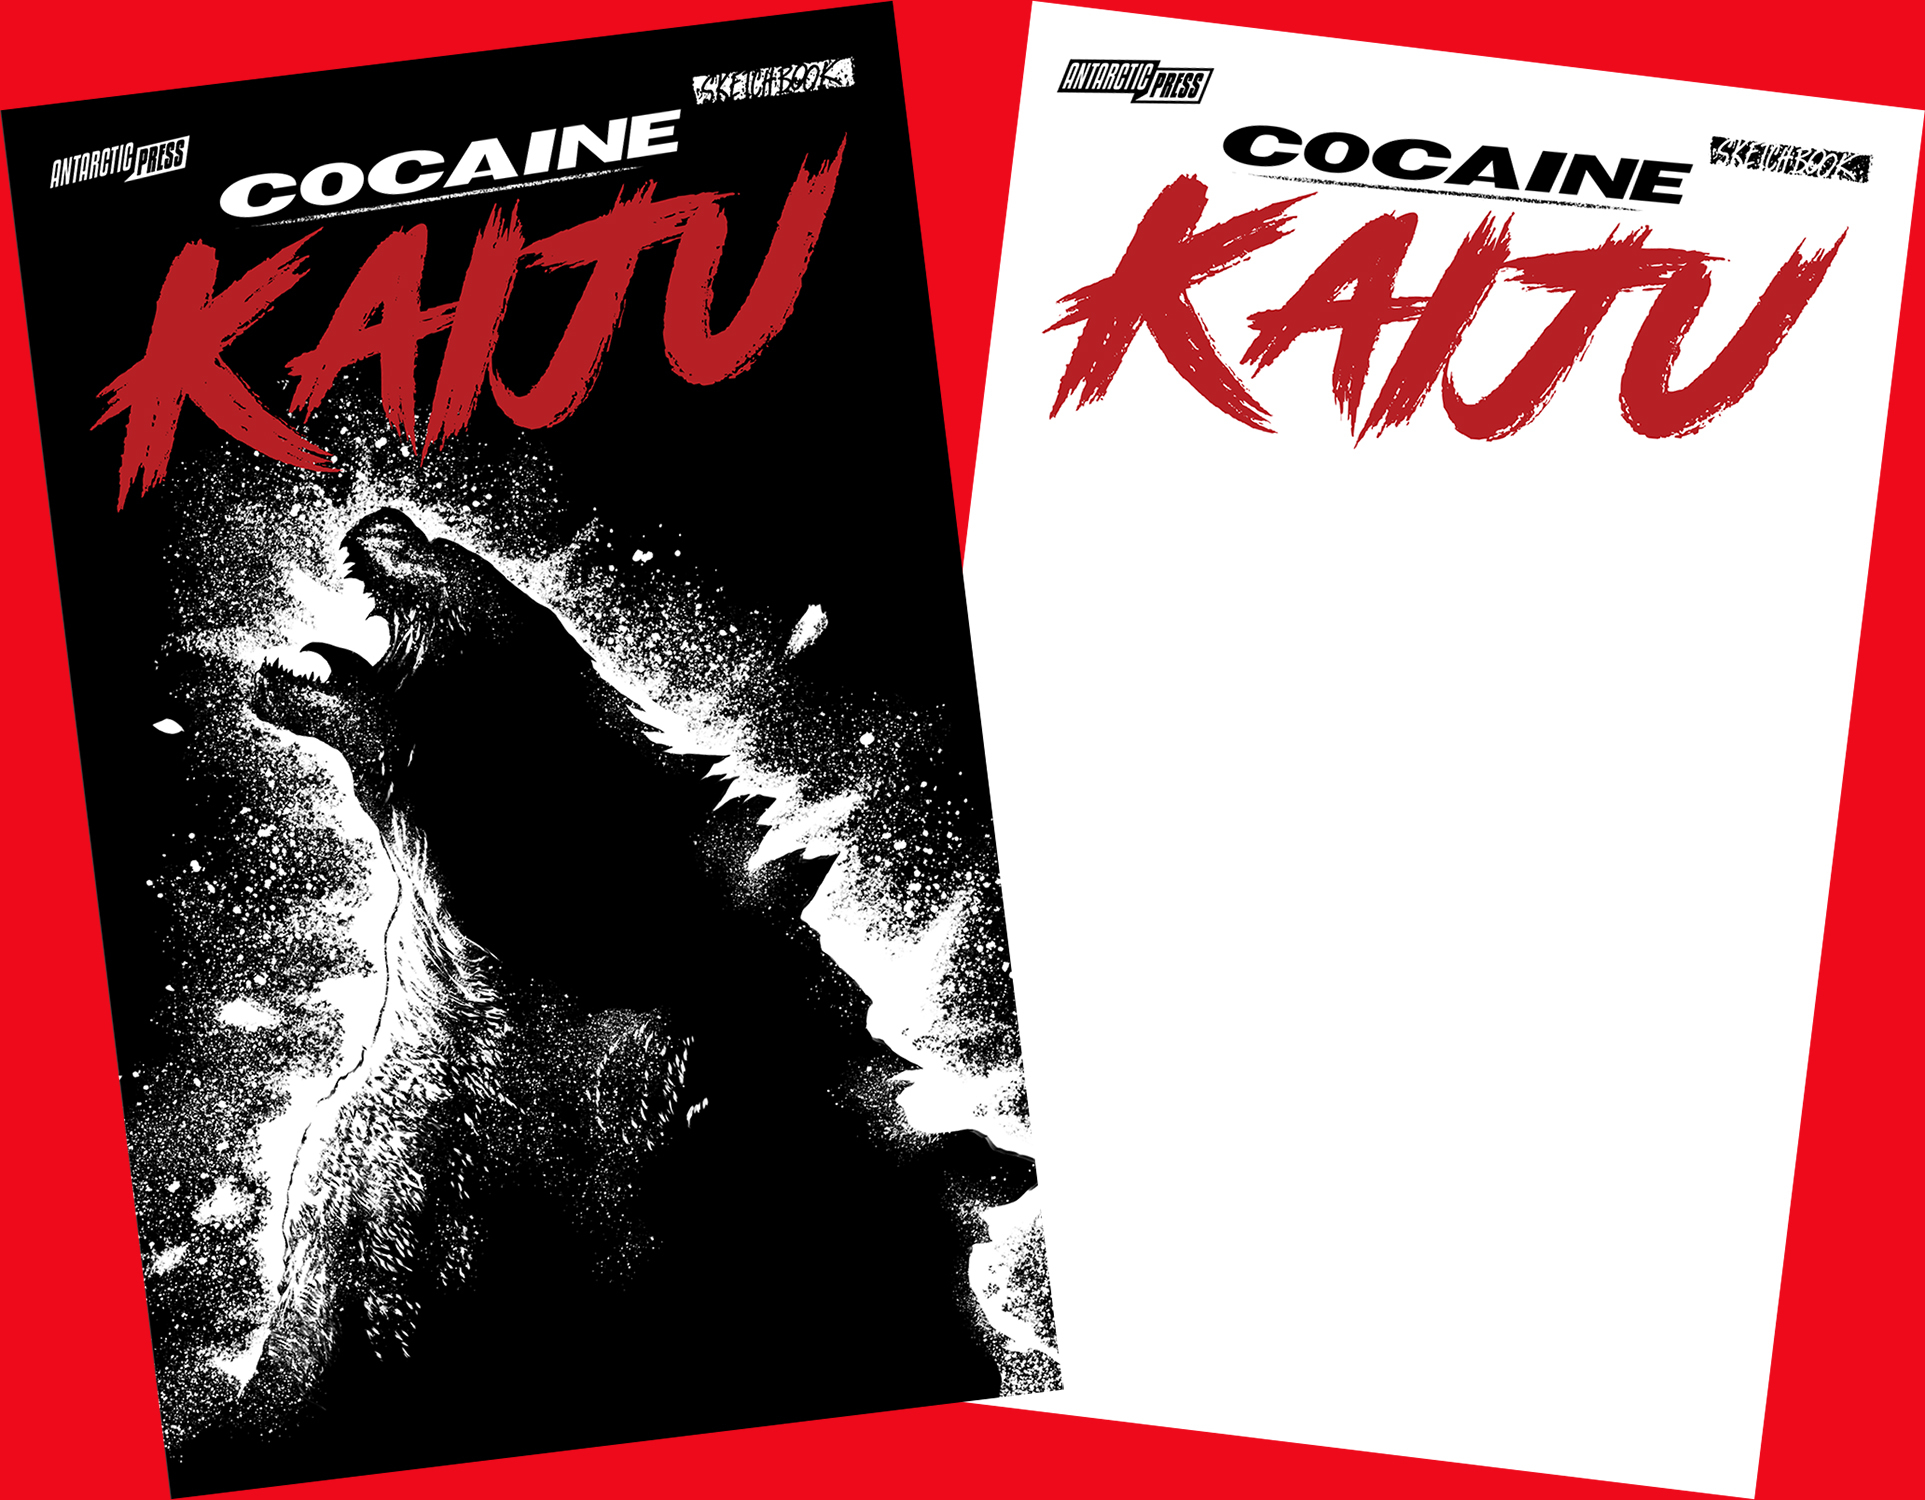 Cocaine Kaiju Sketchbook 8 Ball Pack